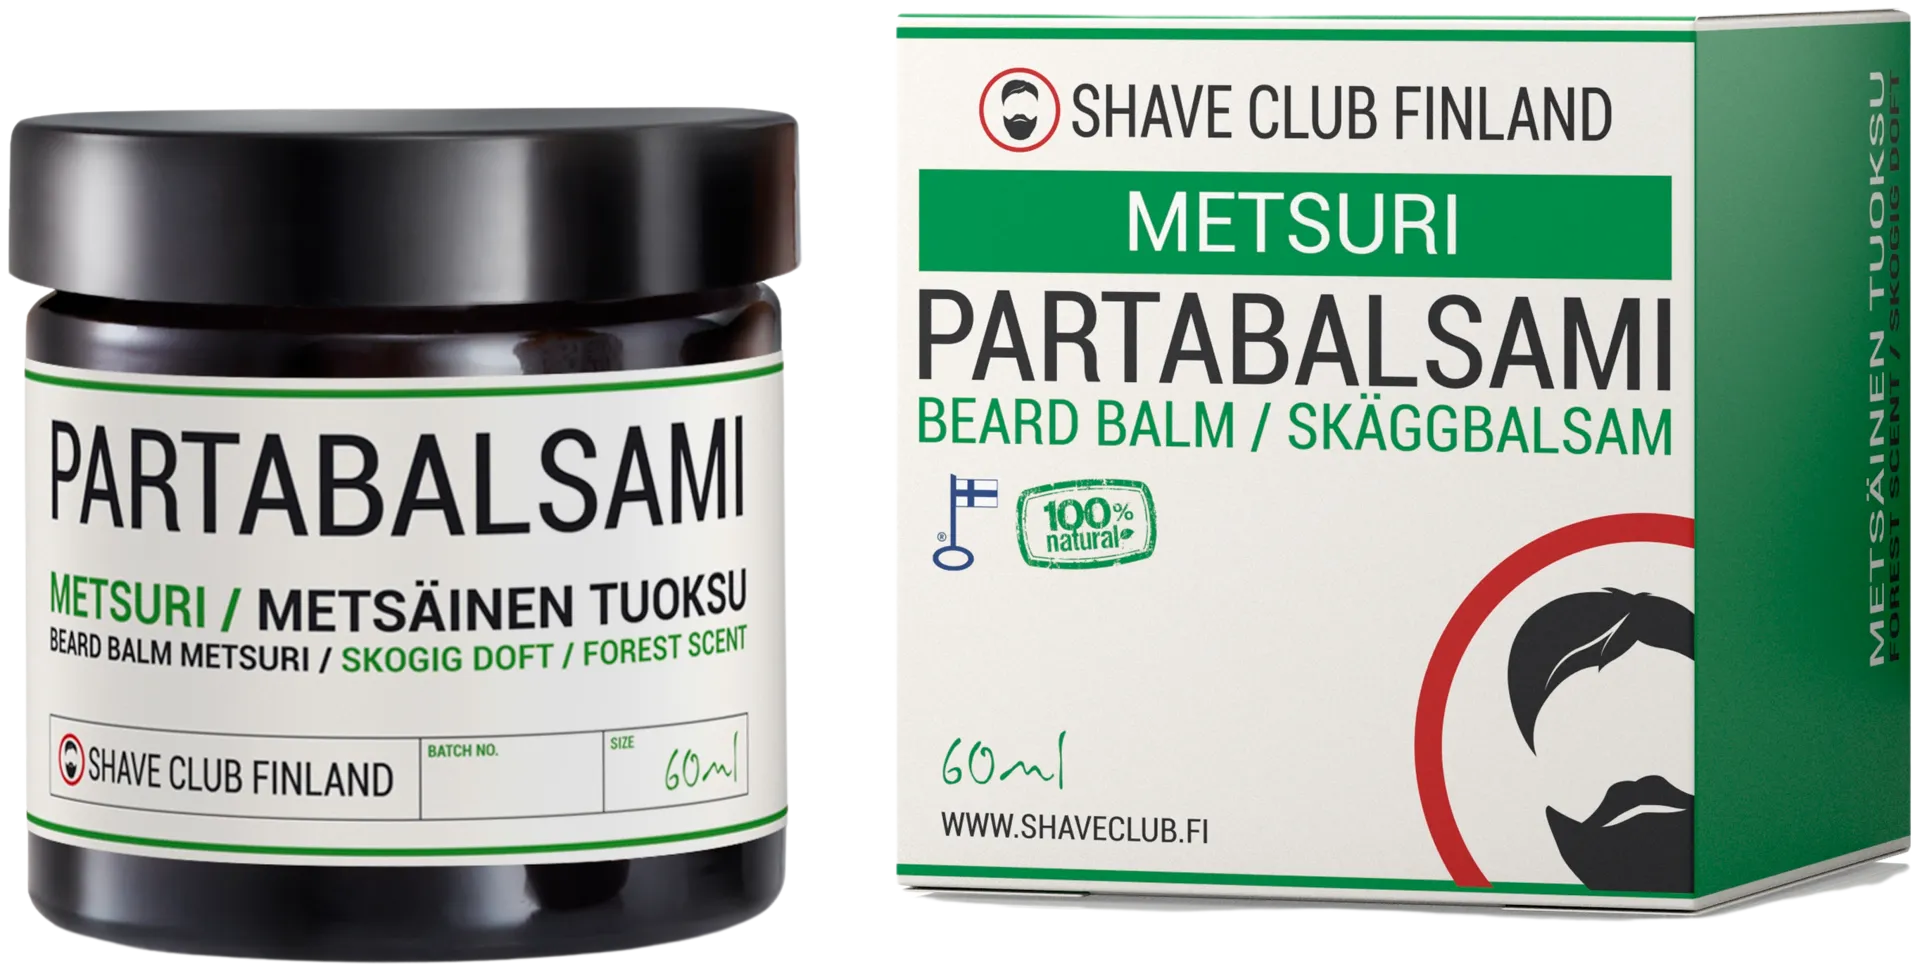 Shave Club Finland partabalsami metsuri 60ml